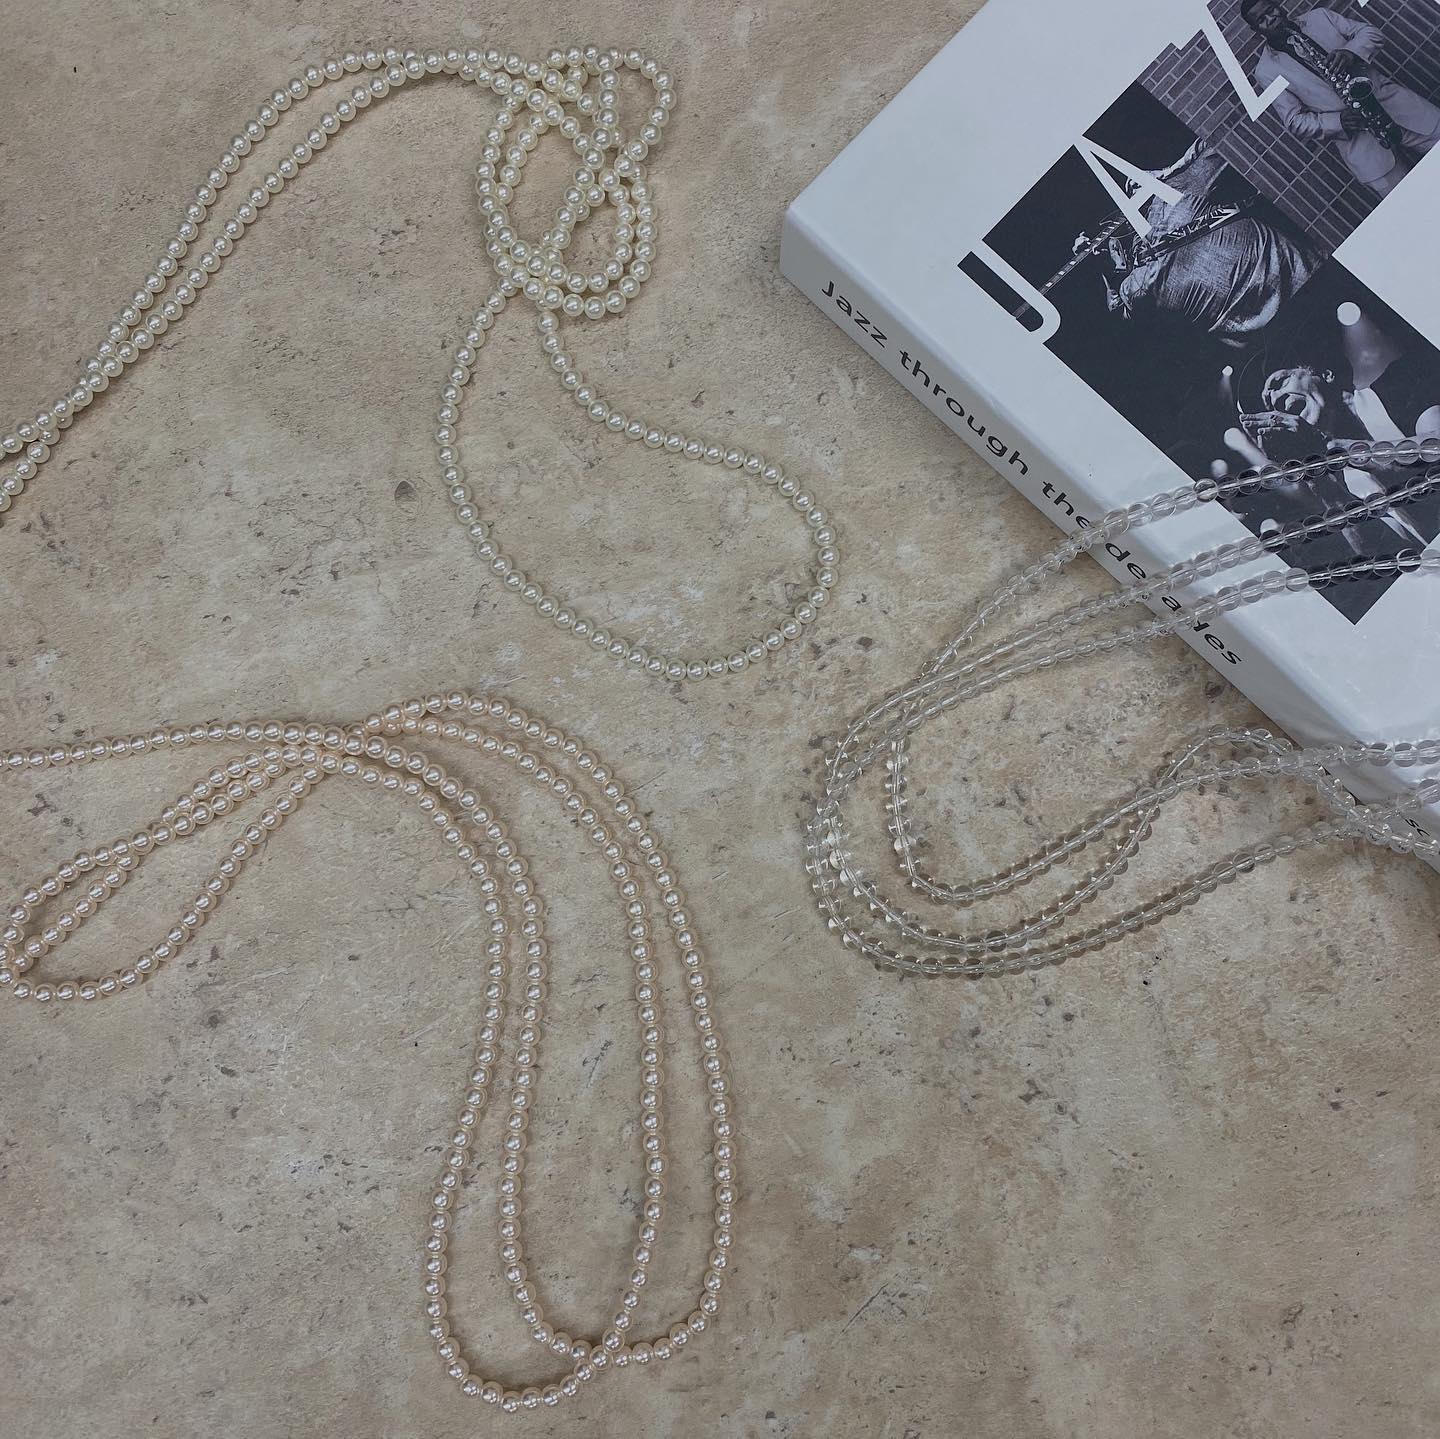 .﻿﻿﻿︎long pearl necklace﻿ ¥1,650﻿﻿﻿新色ピンクも含め、再入荷します♡﻿﻿﻿﻿﻿﻿#ur_melty #ユアメルティ﻿#ロングパールネックレス #コリヨジャ﻿#春コーデ #韓国ファッション #韓国風﻿#オトジョ #大人女子 #オトジョコーデ﻿#오오티디 #데일리룩 #패션 #패션스타그램 #옷스타그램﻿#일본패션 #유아멜티 #코디 #코디스타그램